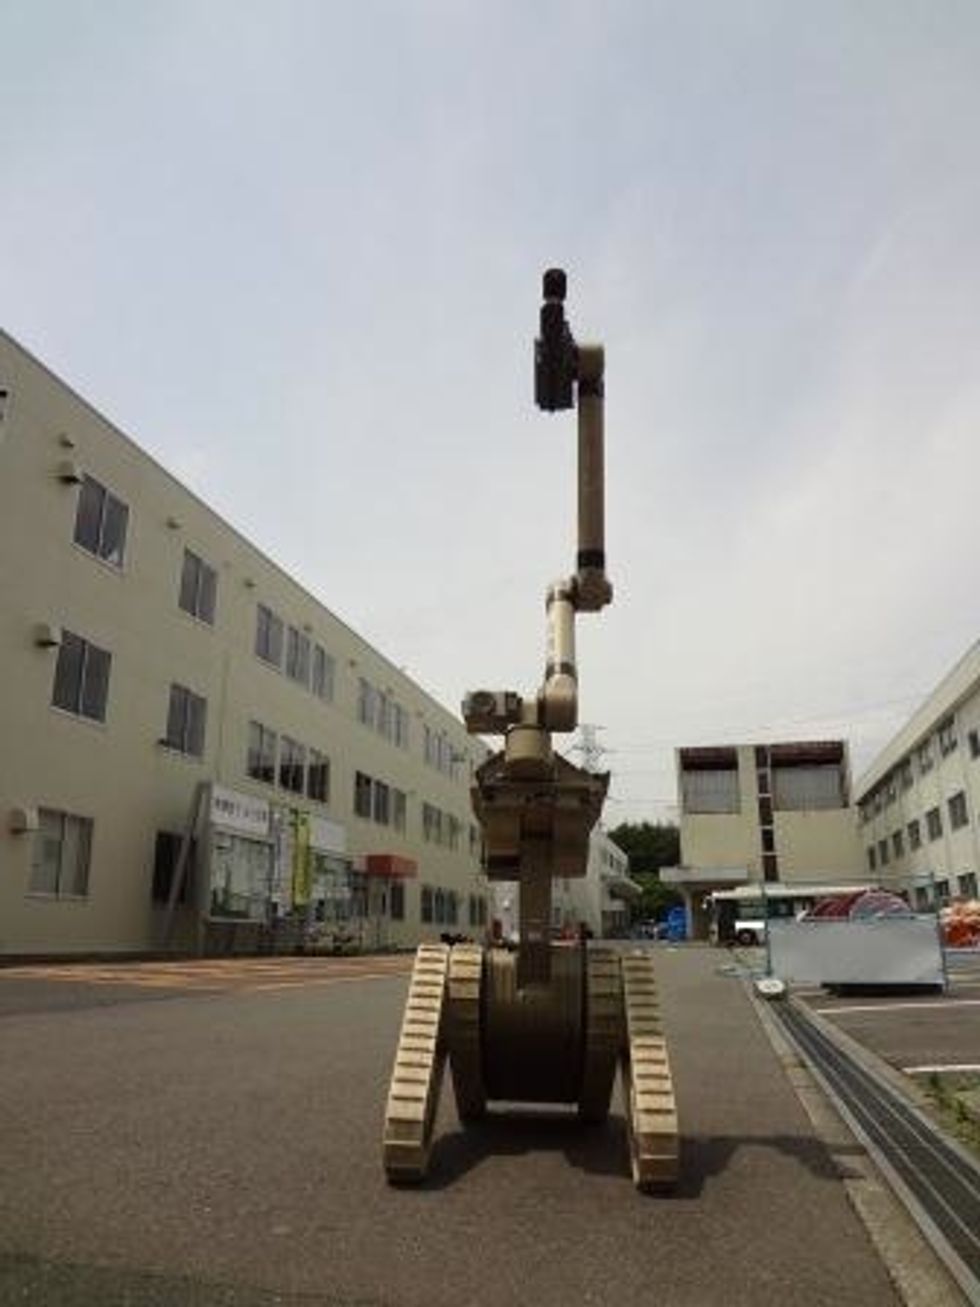 robot operator training with irobot warrior extended at fukushima daiichi nuclear power plant